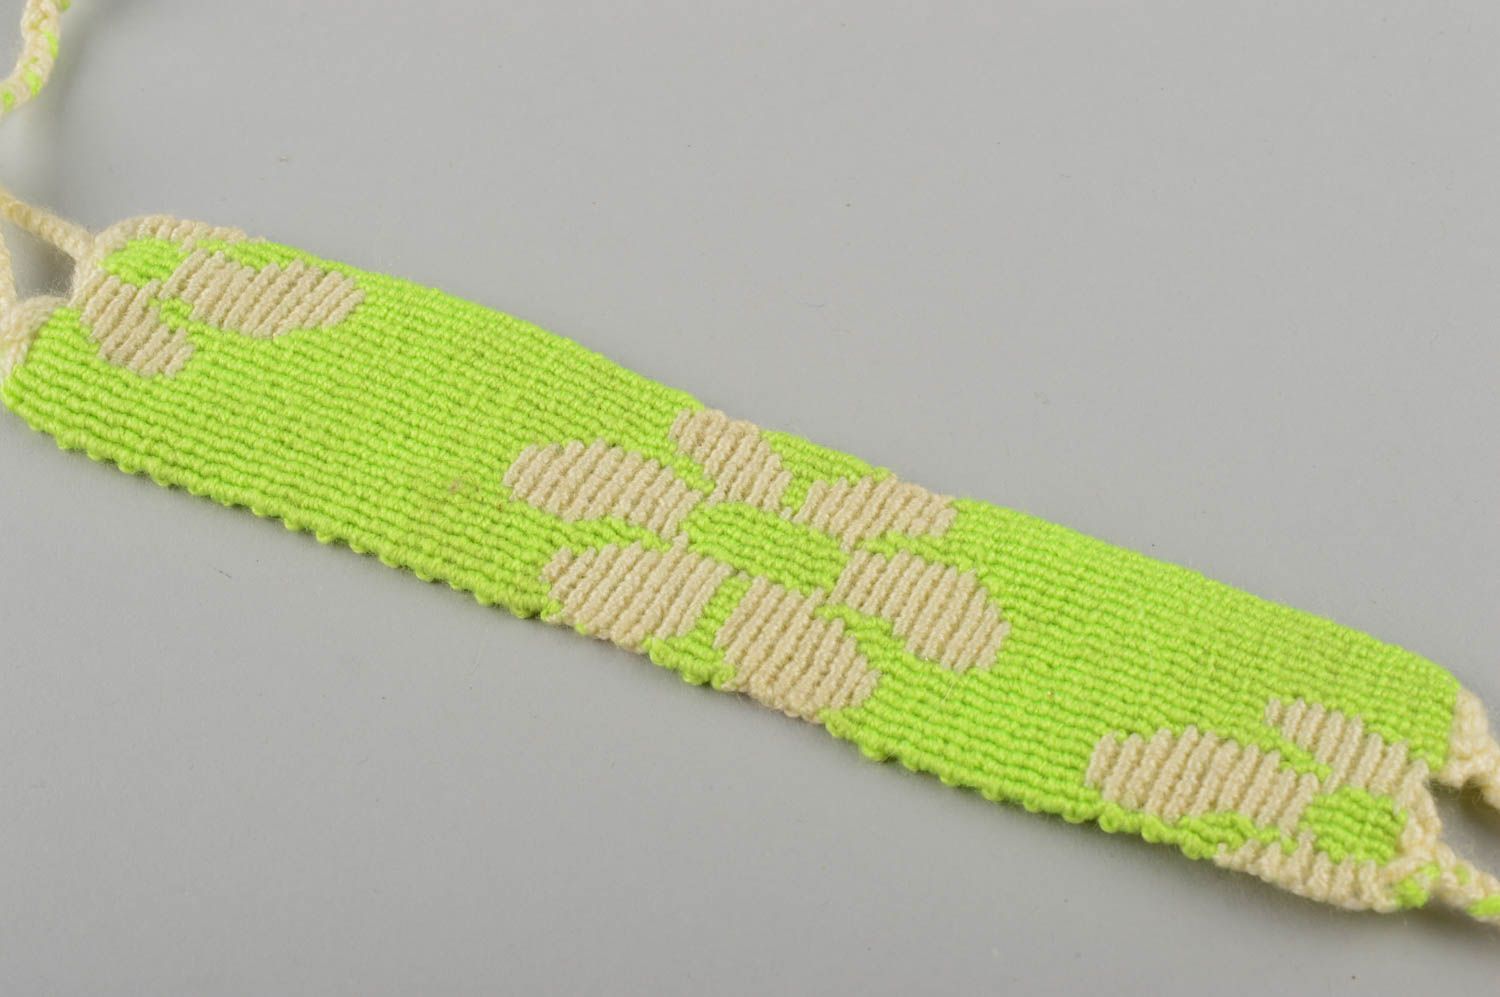 Textil Schmuck handmade Armband Frauen greller Schmuck für Frauen Damen Armband foto 3